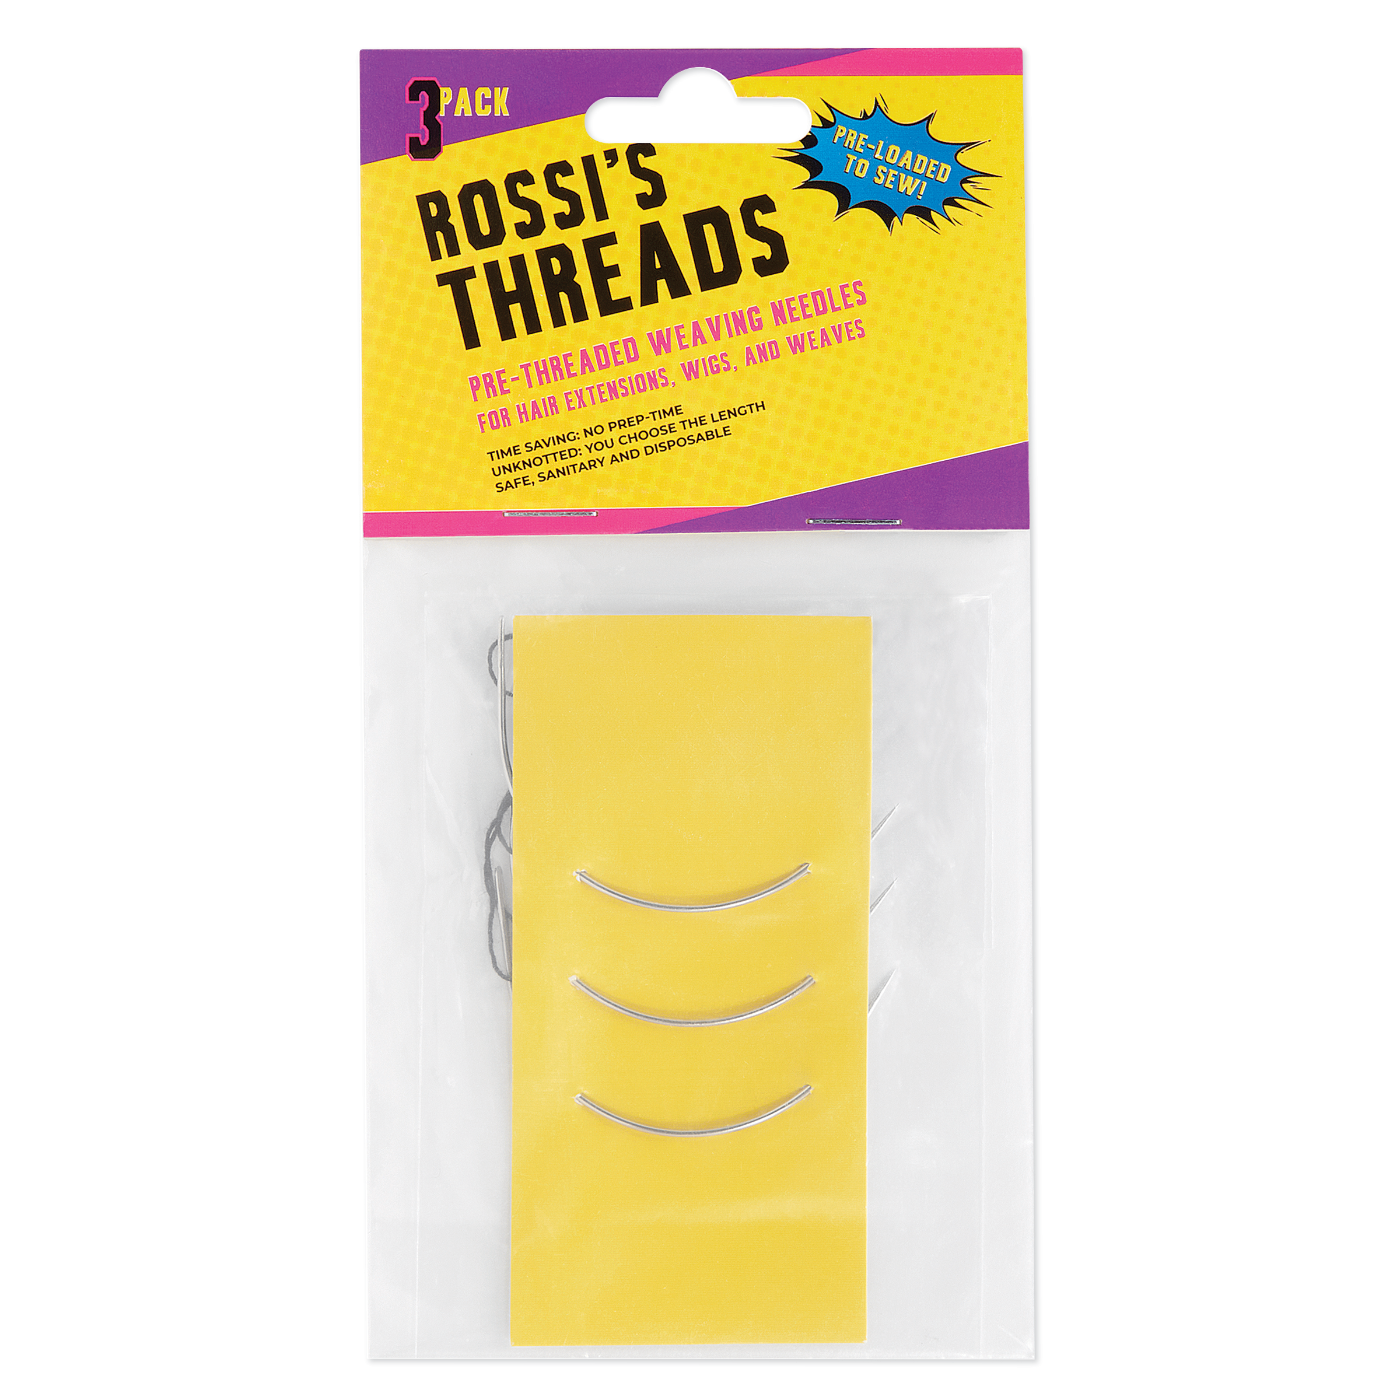 Pre-threaded Weaving Needles - 3 per pack